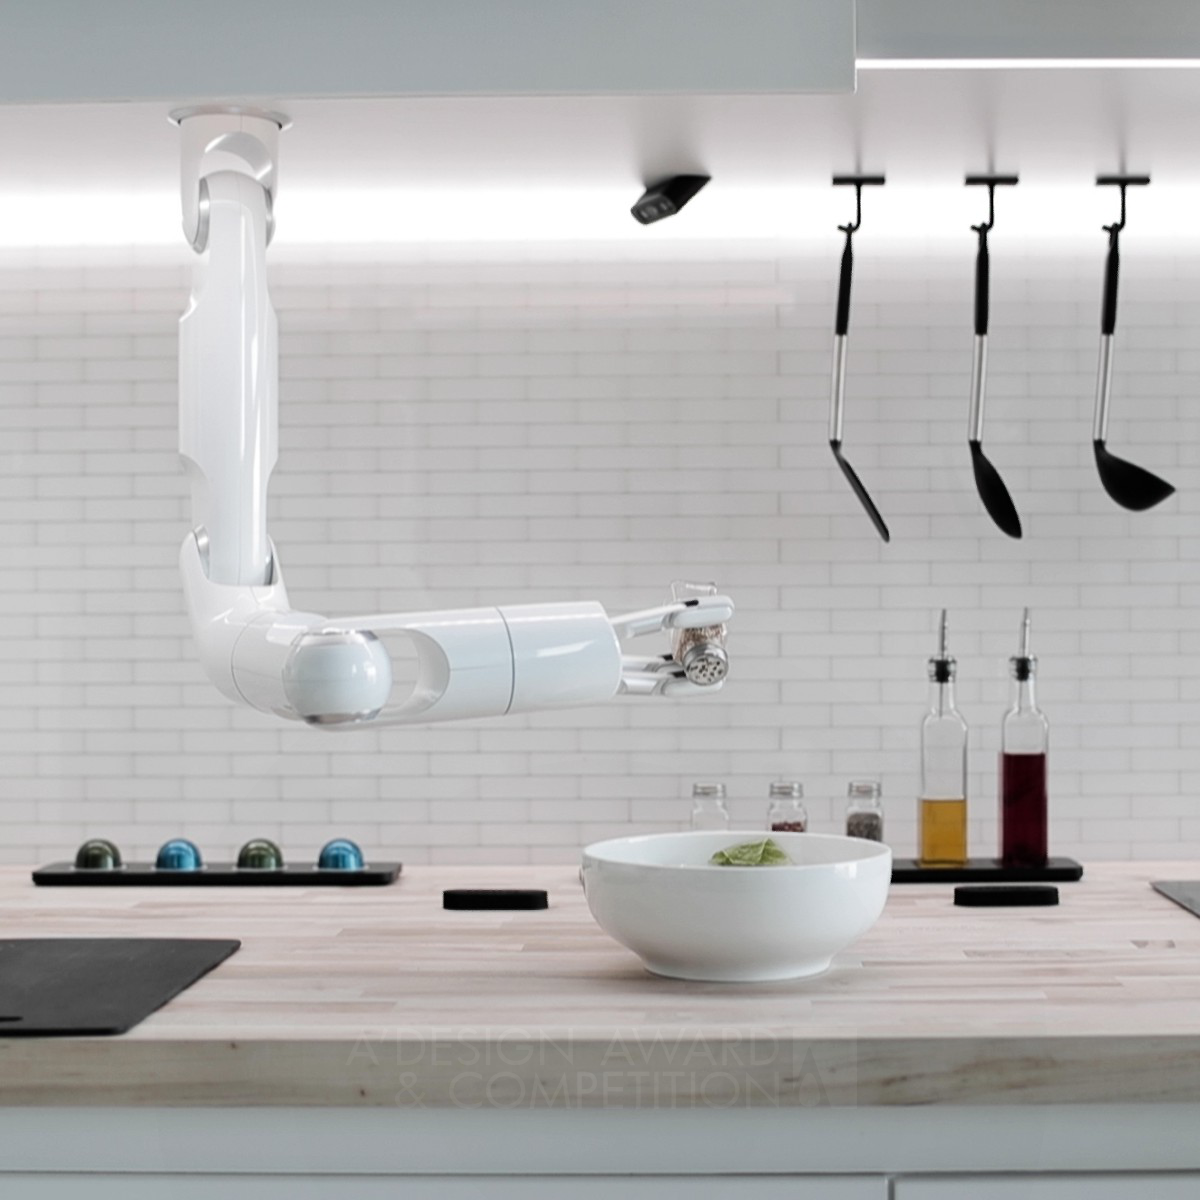 Samsung Bot Chef Robotic Arm by Think Tank Team